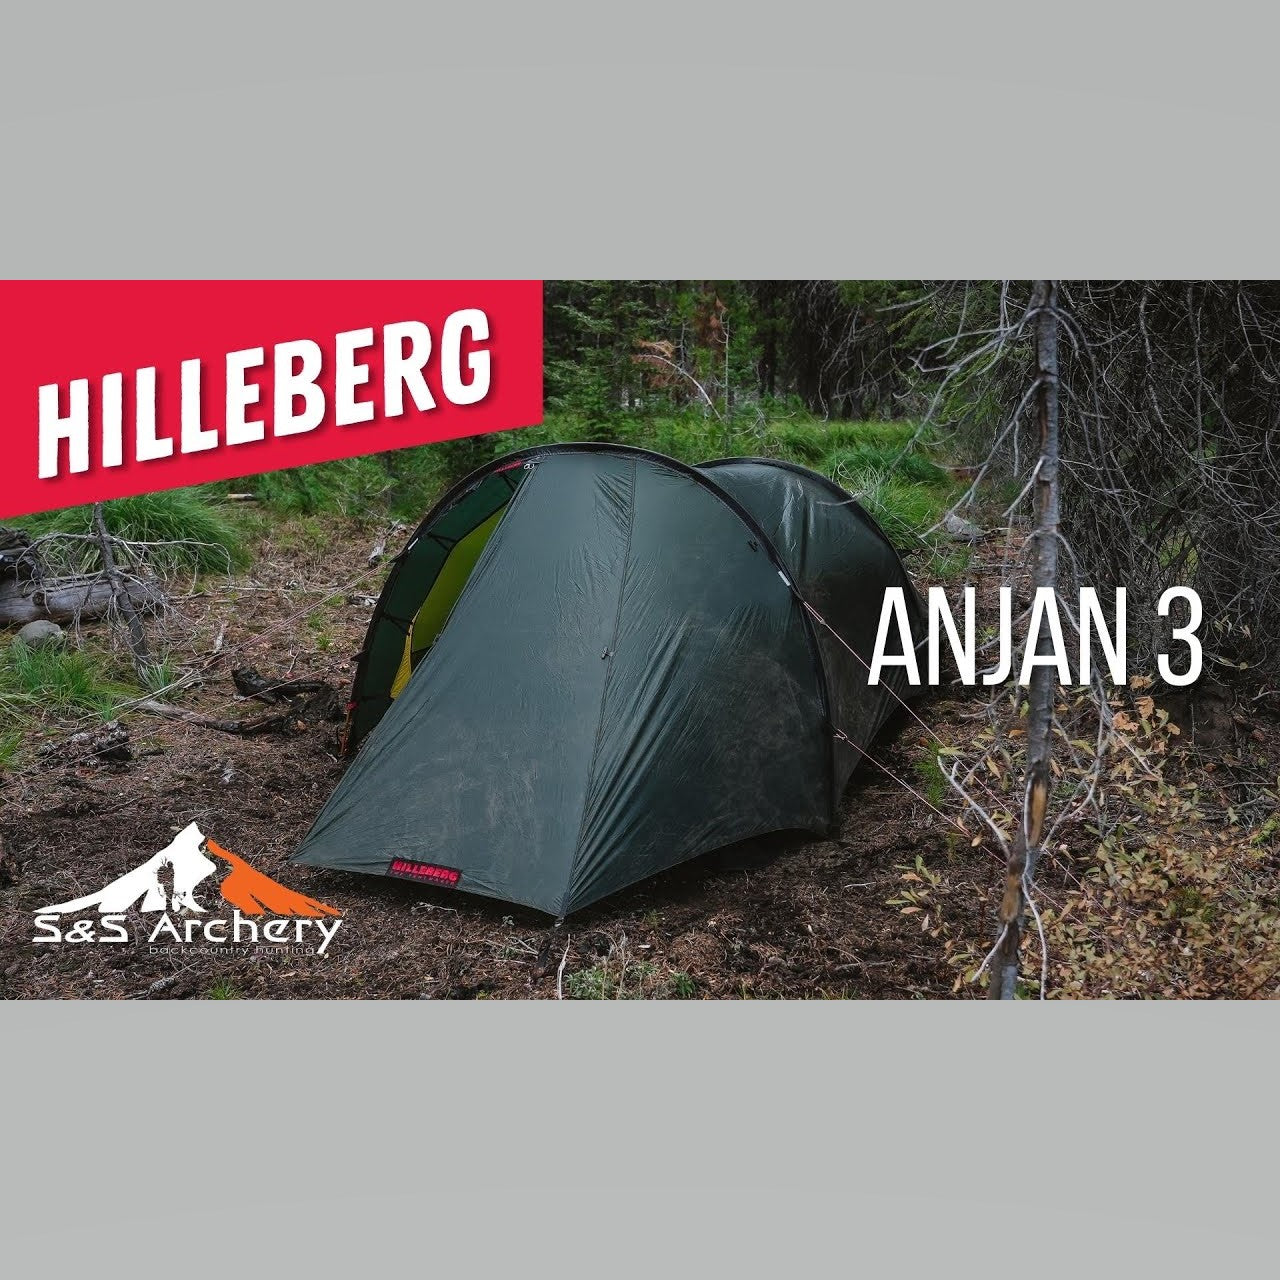 Hilleberg Anjan 3 Backpacking Tent